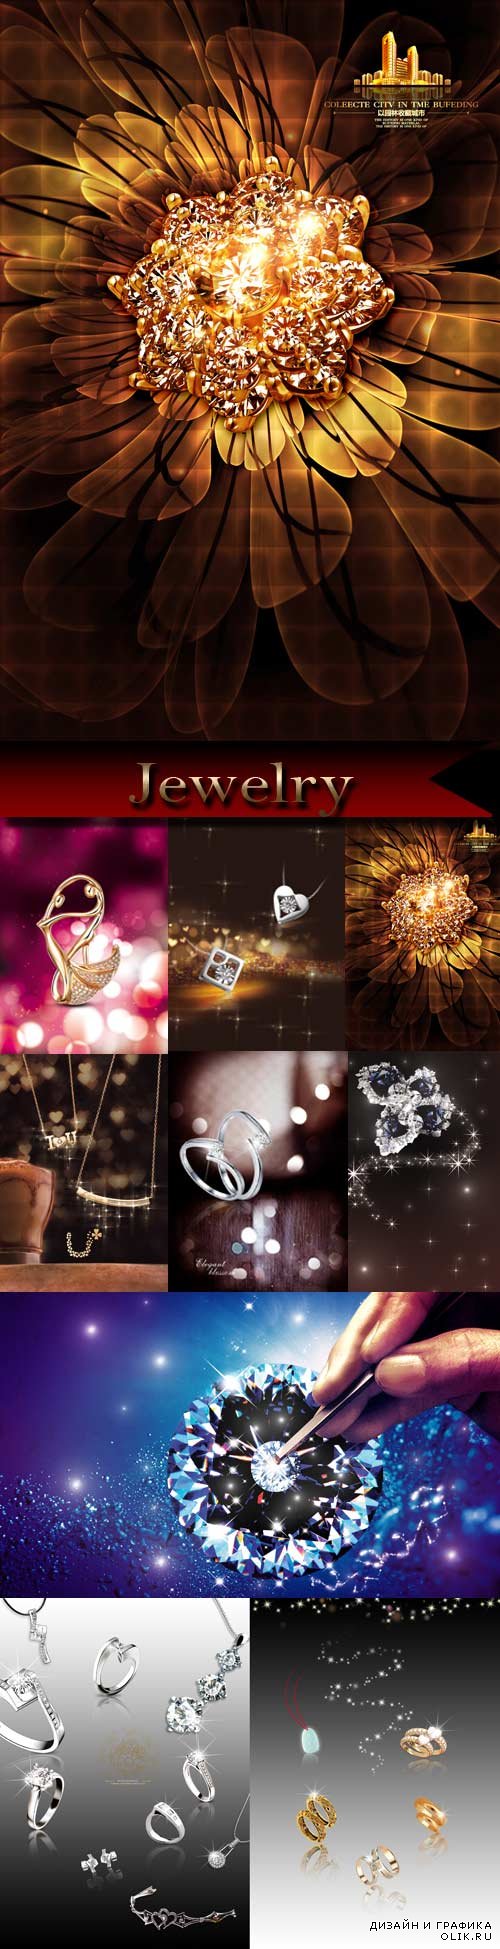 Jewelry - PSD Sources